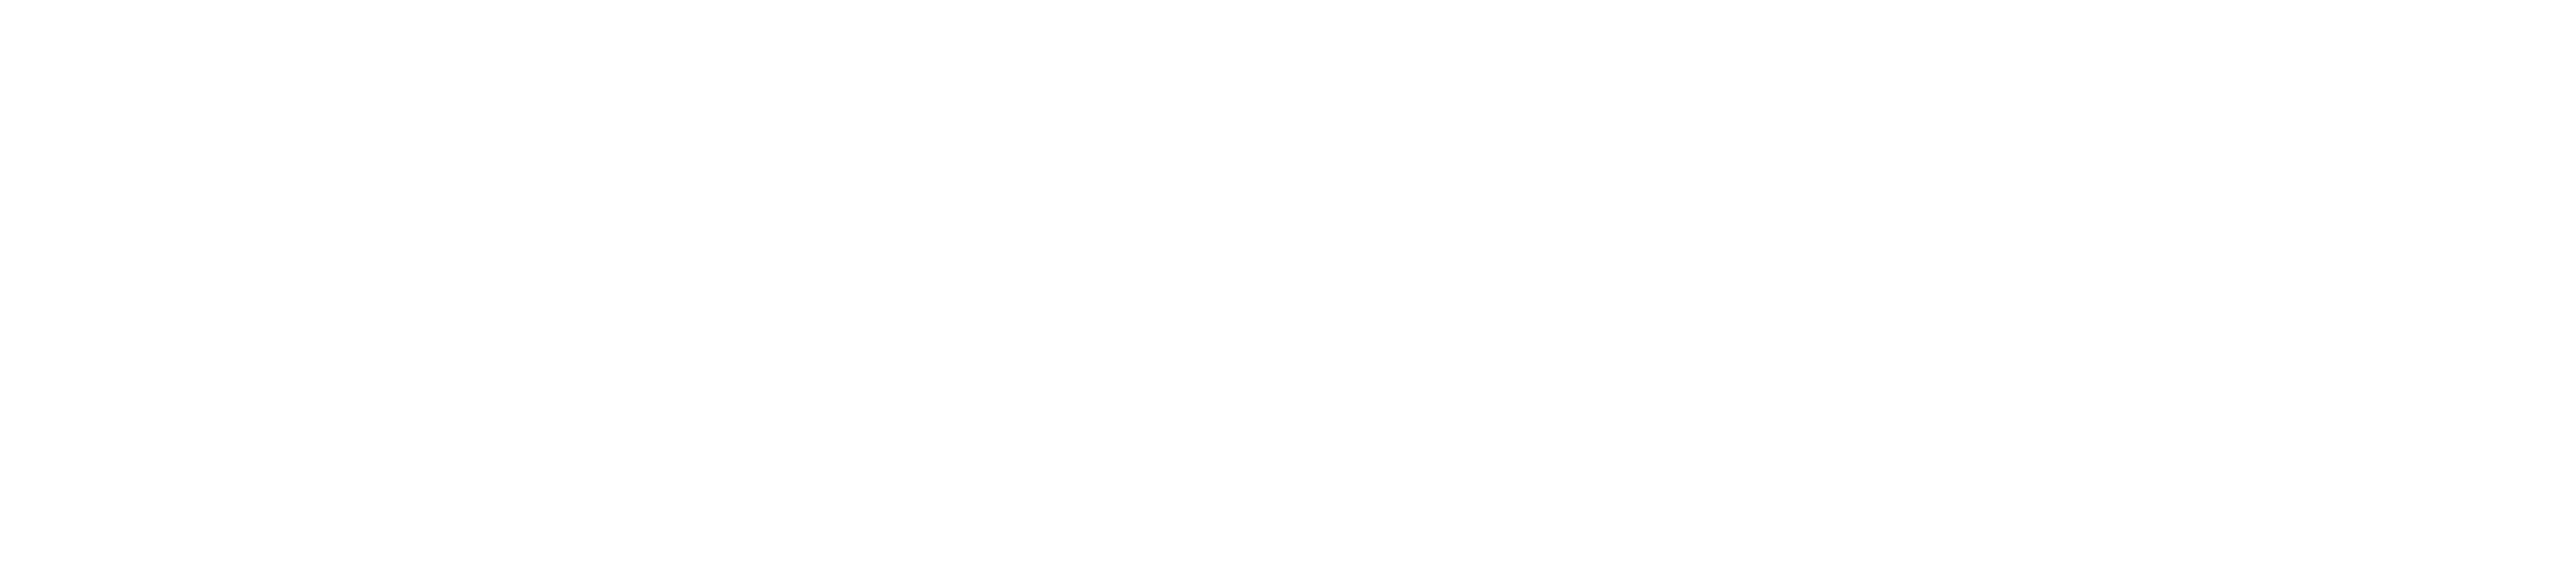 American Dynasties: The Kennedys logo